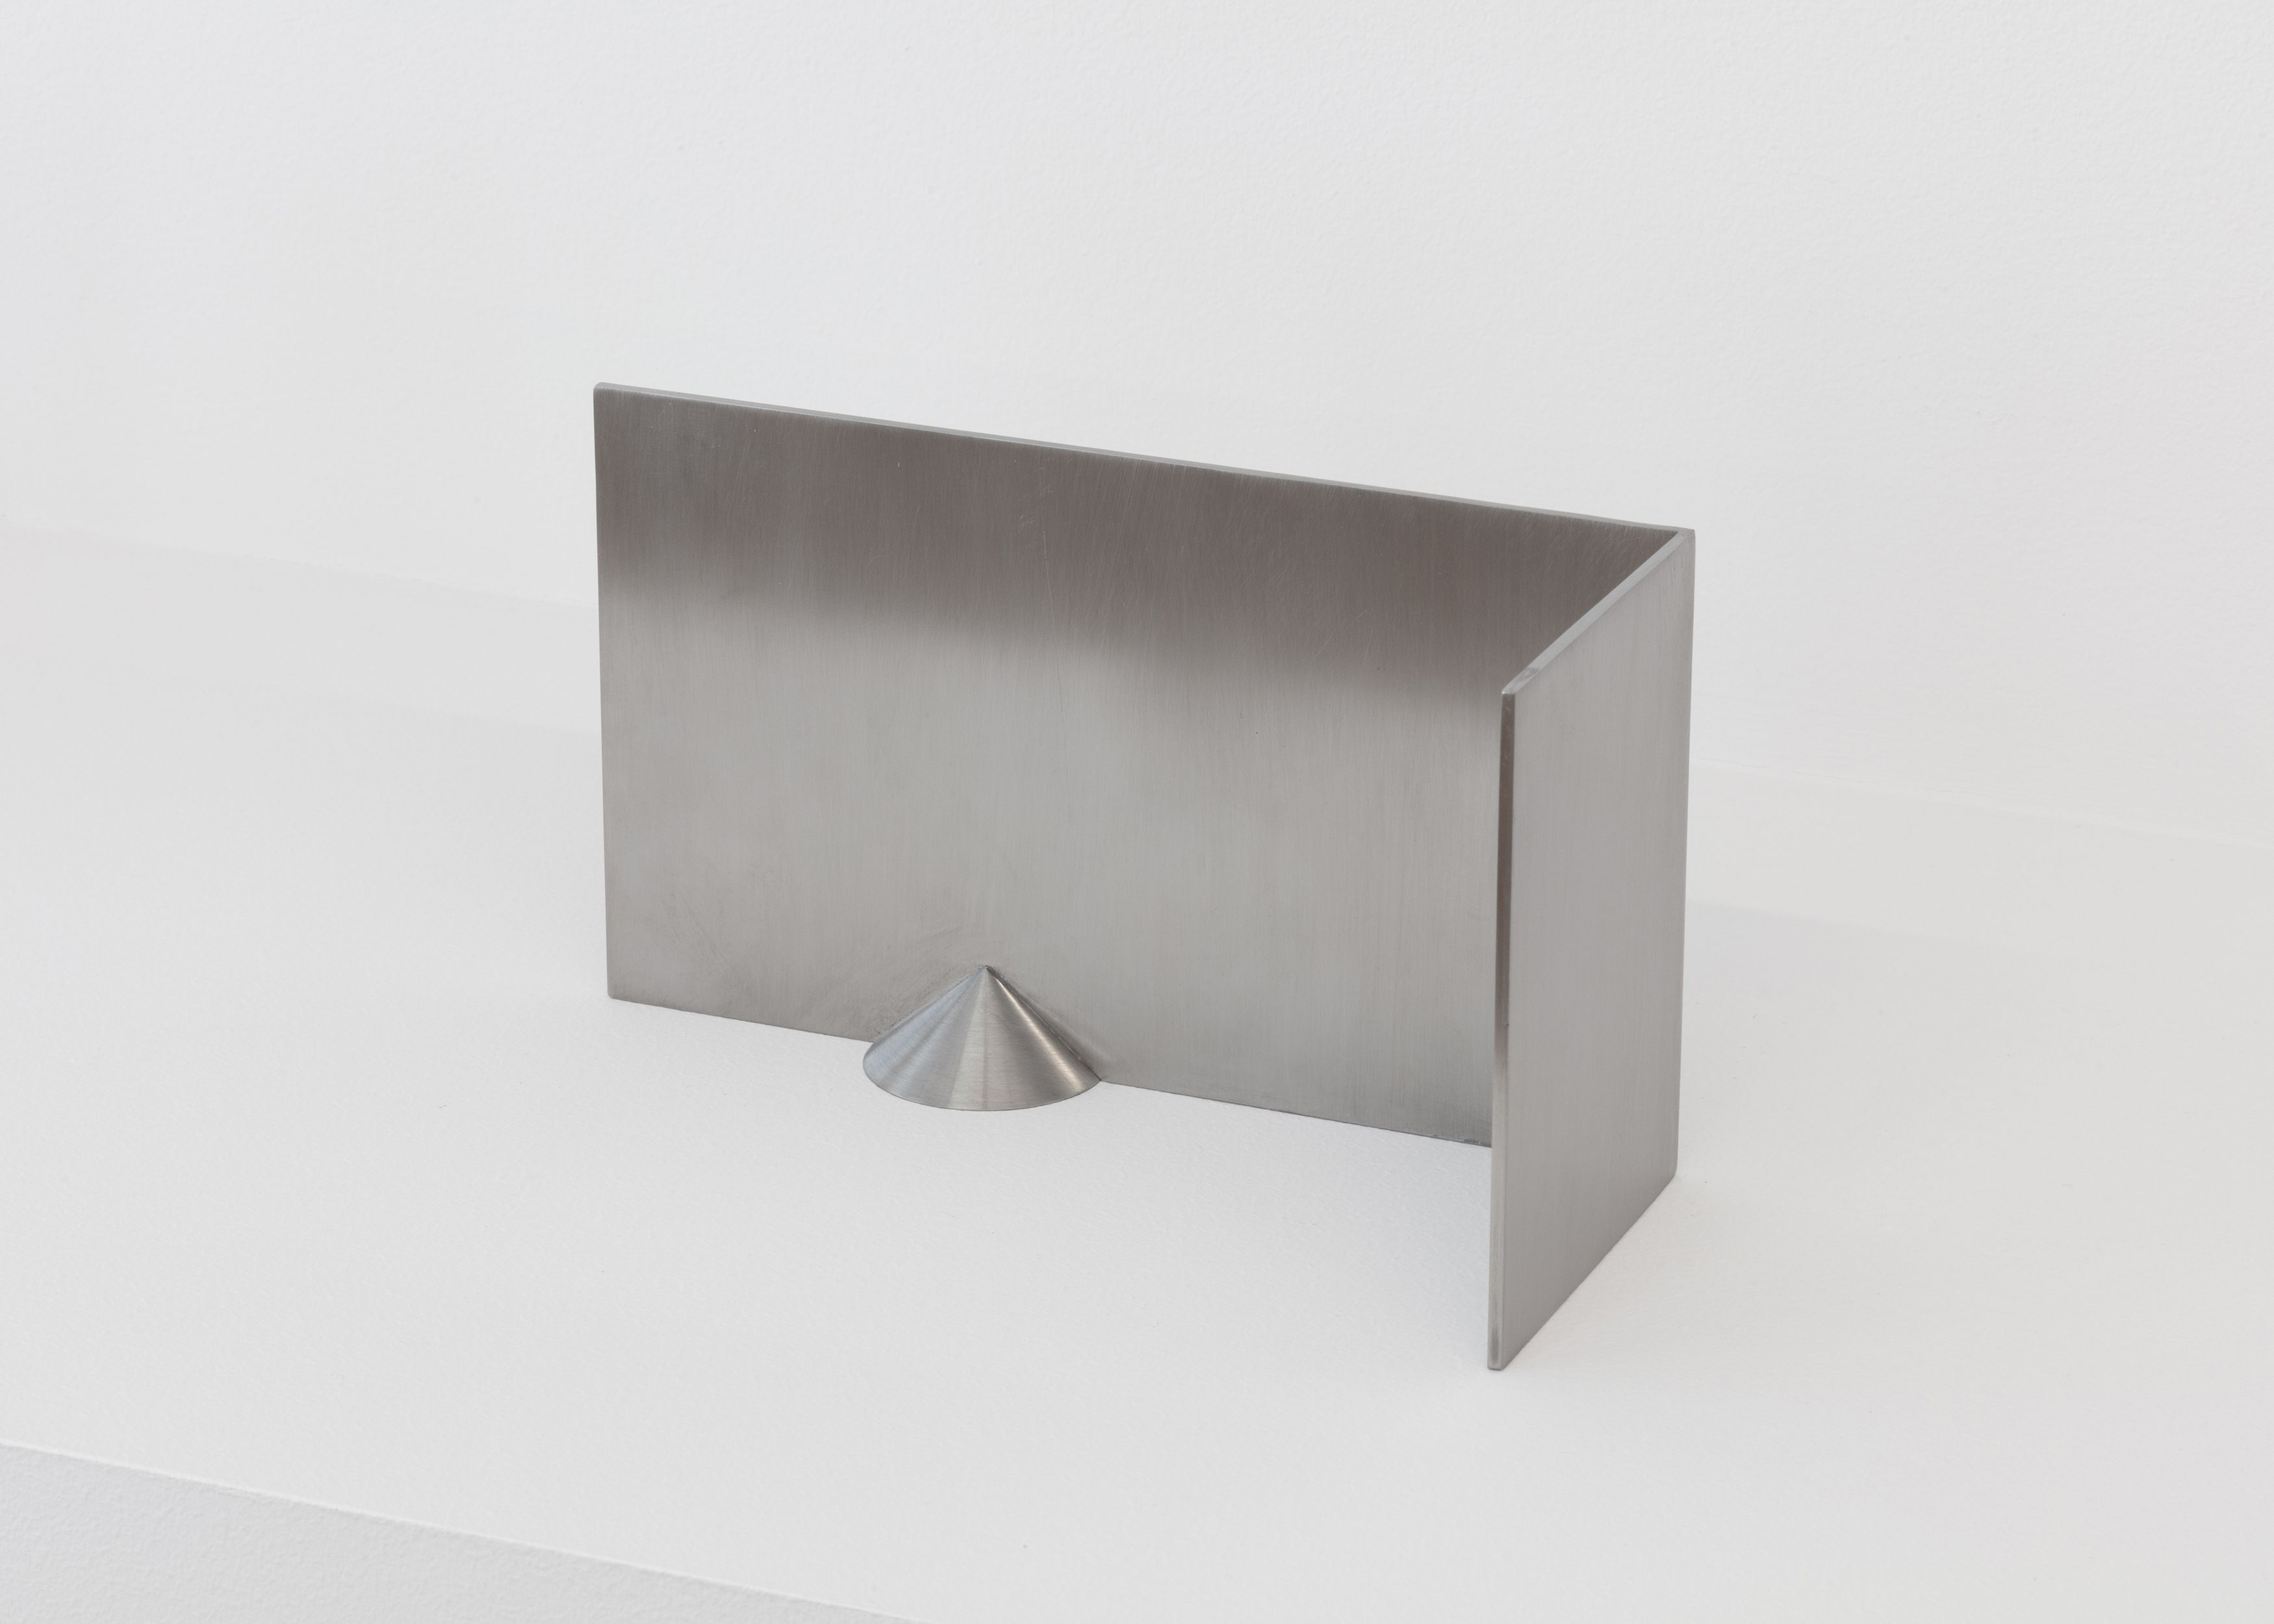 Stephen Lichty, Form 1, 2021, stainless steel, 4 x 7 x 5 in. (10.16 x 17.78 x 12.7 cm)